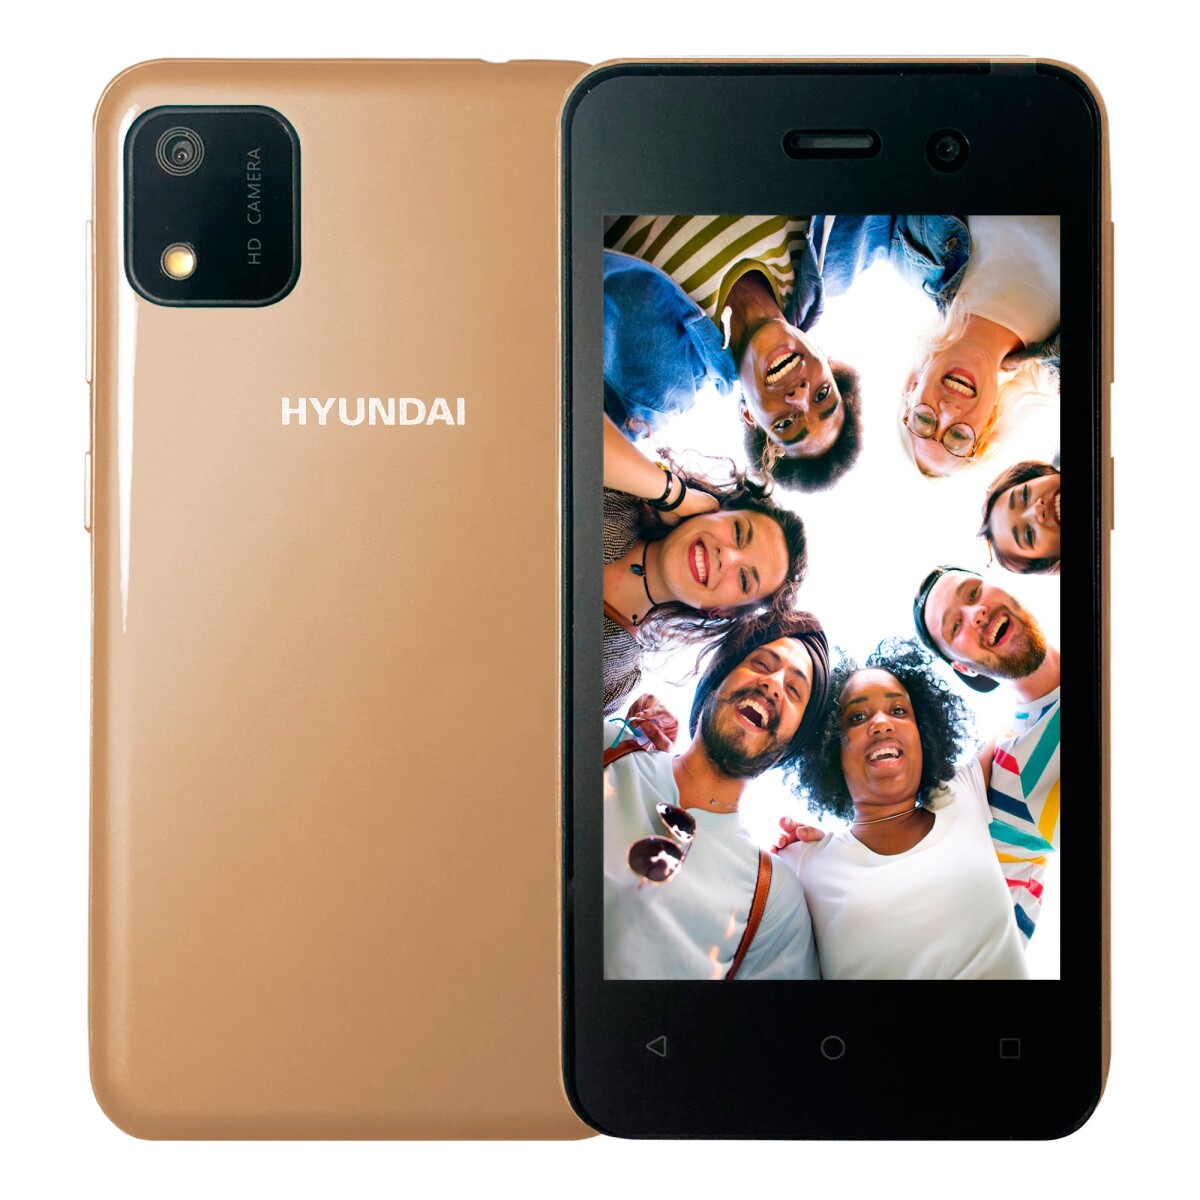 Hyundai - Smartphone E485 - 4" Multitáctil. Quad Core. 3G. Android 10. Ram 1GB / Rom 16GB. 2MP+VGA. - 001 